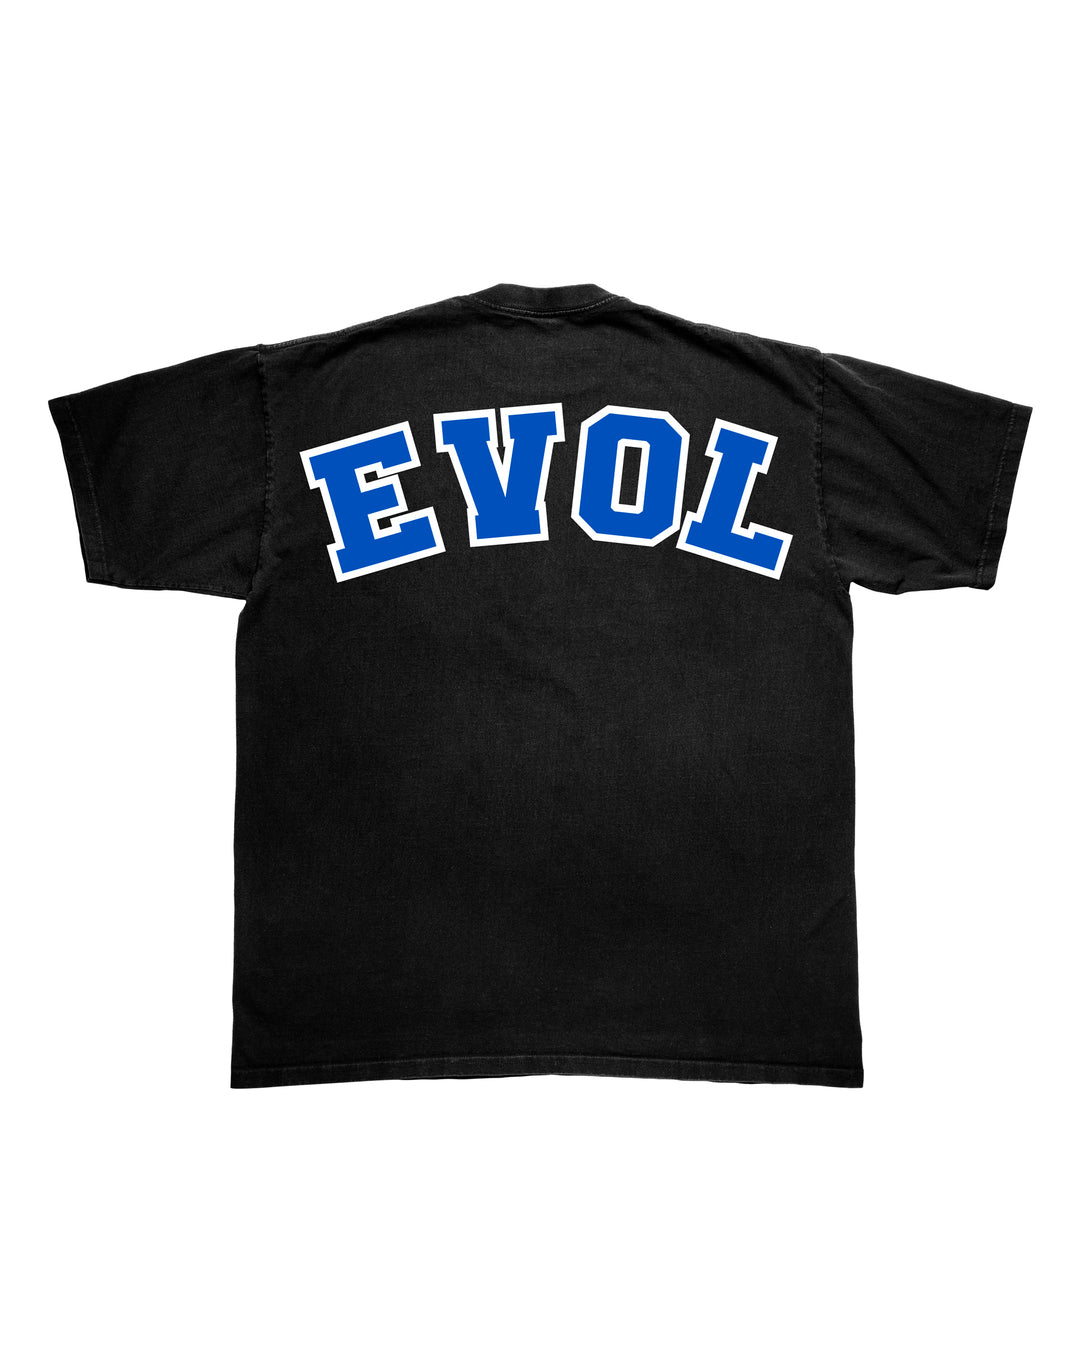 EVOL 777 Black And Blue shirt